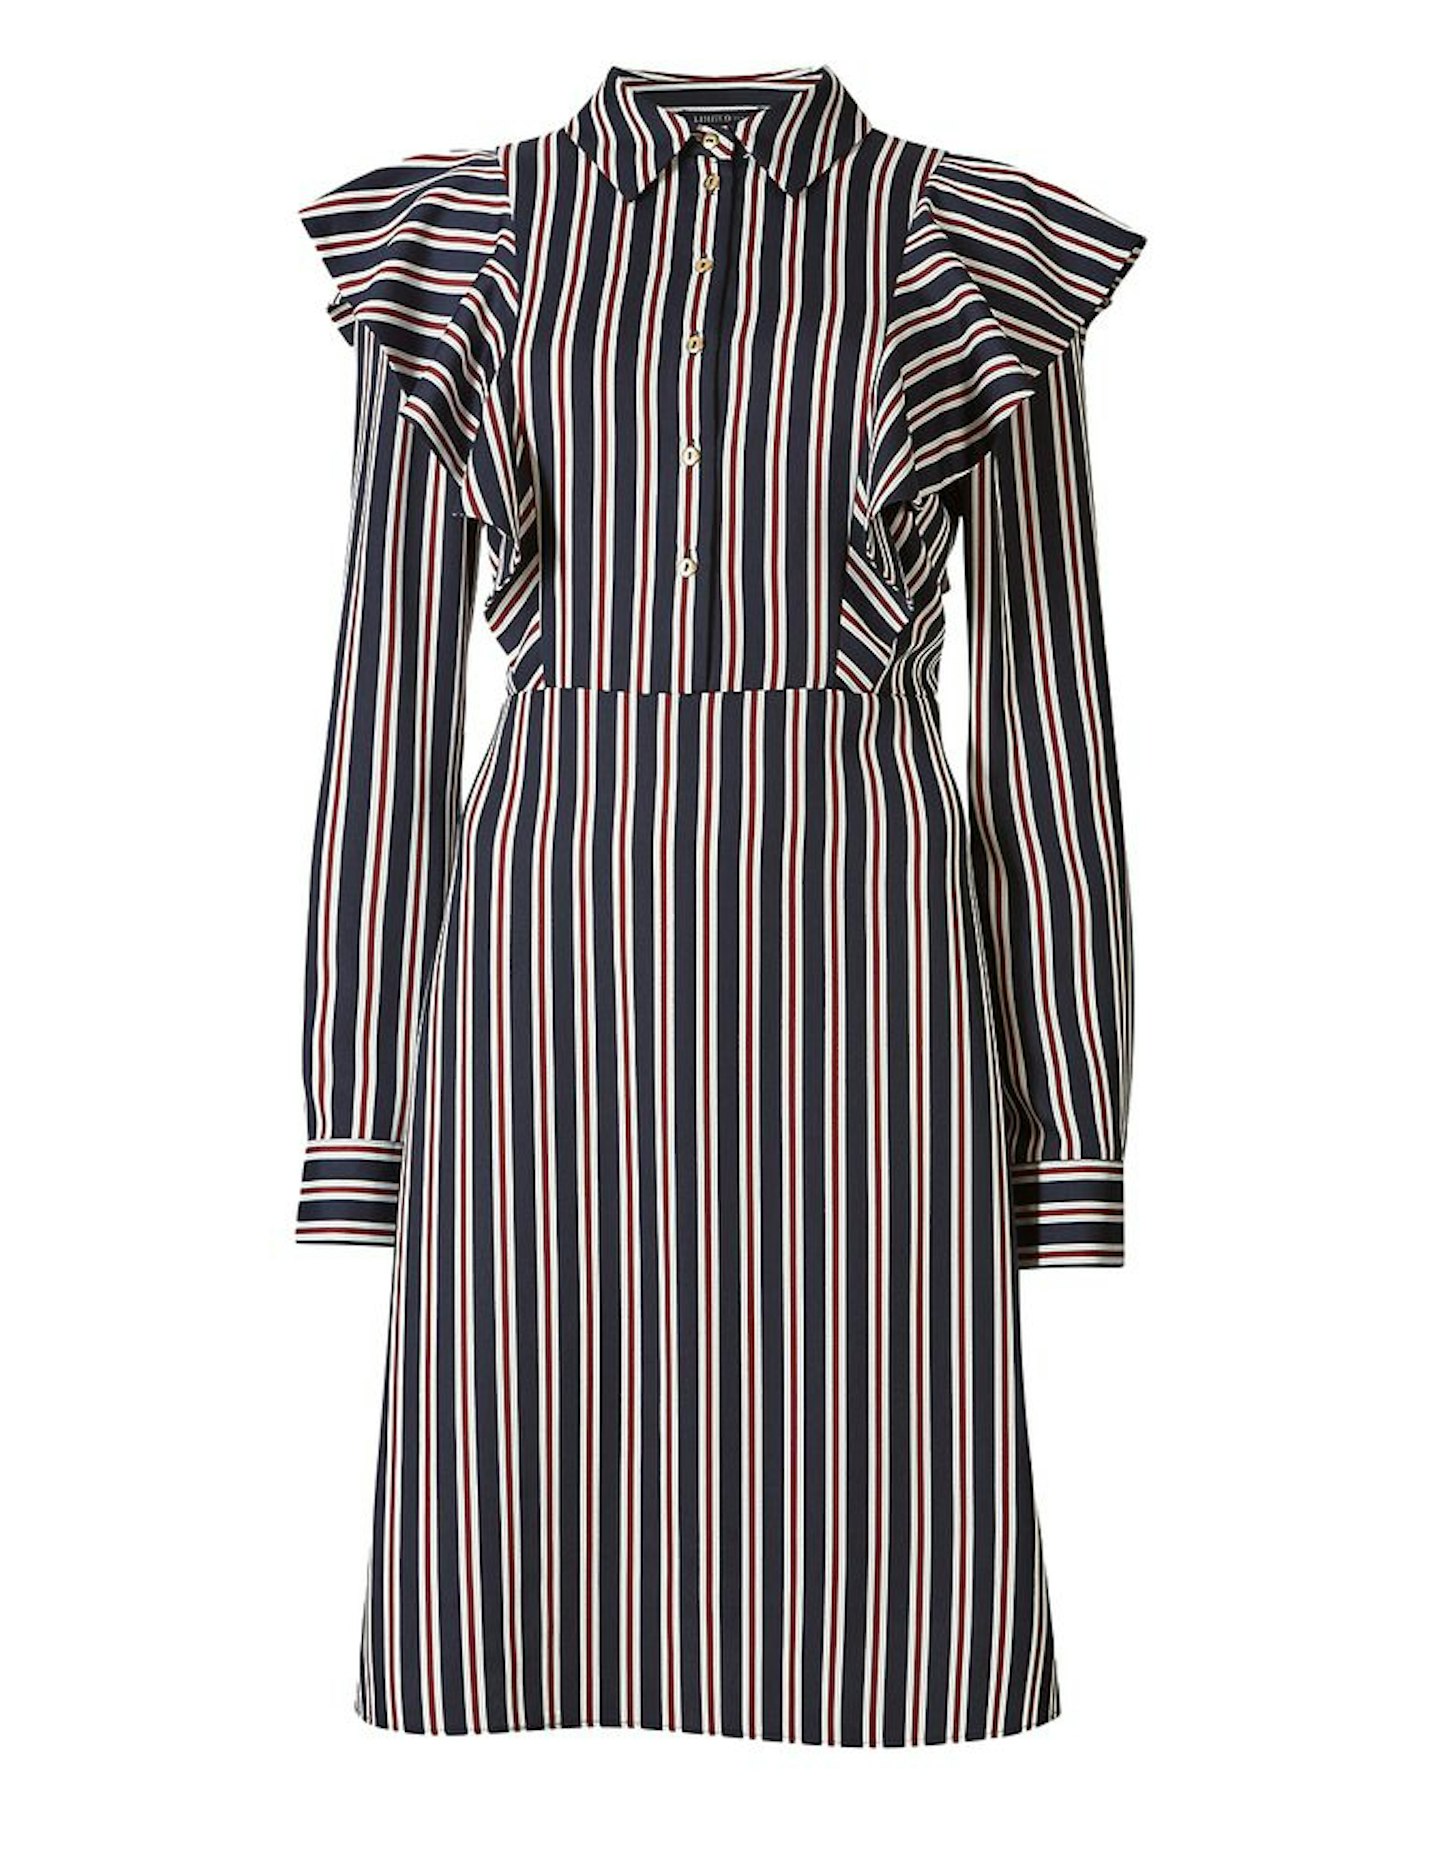 M&S striped dress